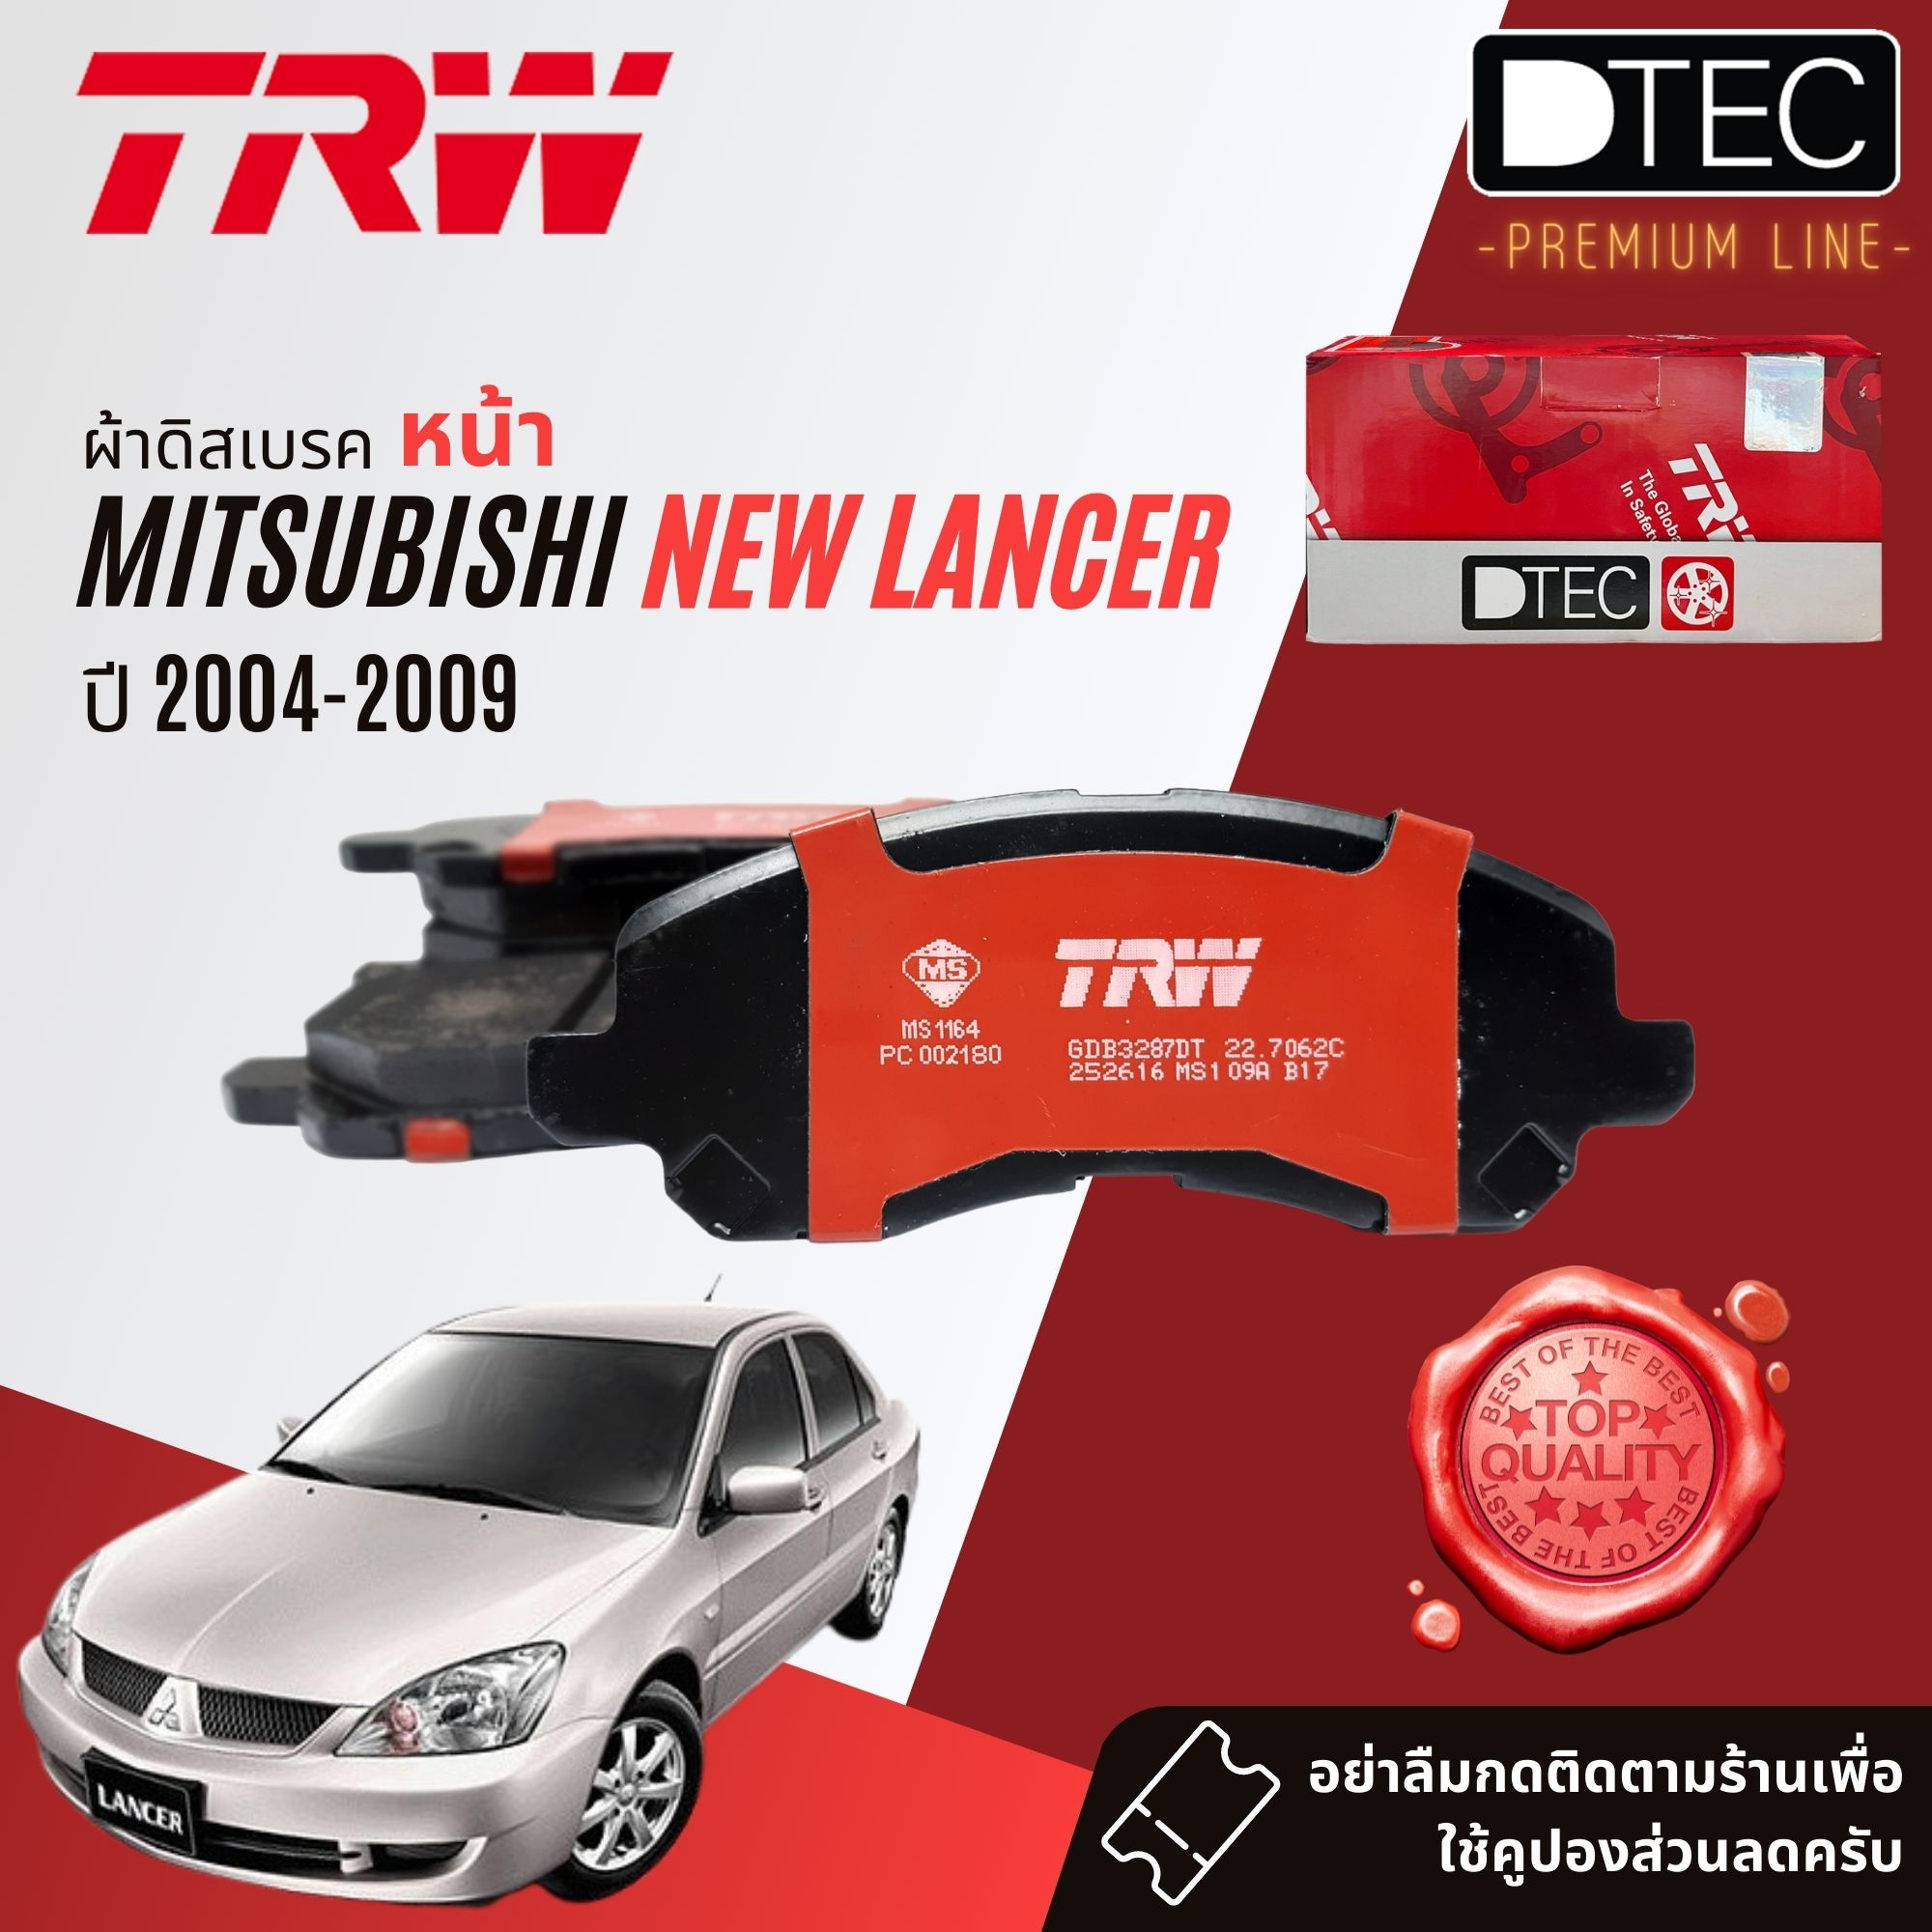 [TRW Premium] ผ้าดิสเบรคหน้า ผ้าเบรคหน้า Mitsubishi new Lancer รุ่นปรับโฉมไฟแหลม ปี 2004-2009 TRW D-TEC GDB 3287 DT มิตซูบิชิ แลนเซอร์ ซีเดีย ปี 04,05,06,07,08,09,47,48,49,50,51,52,